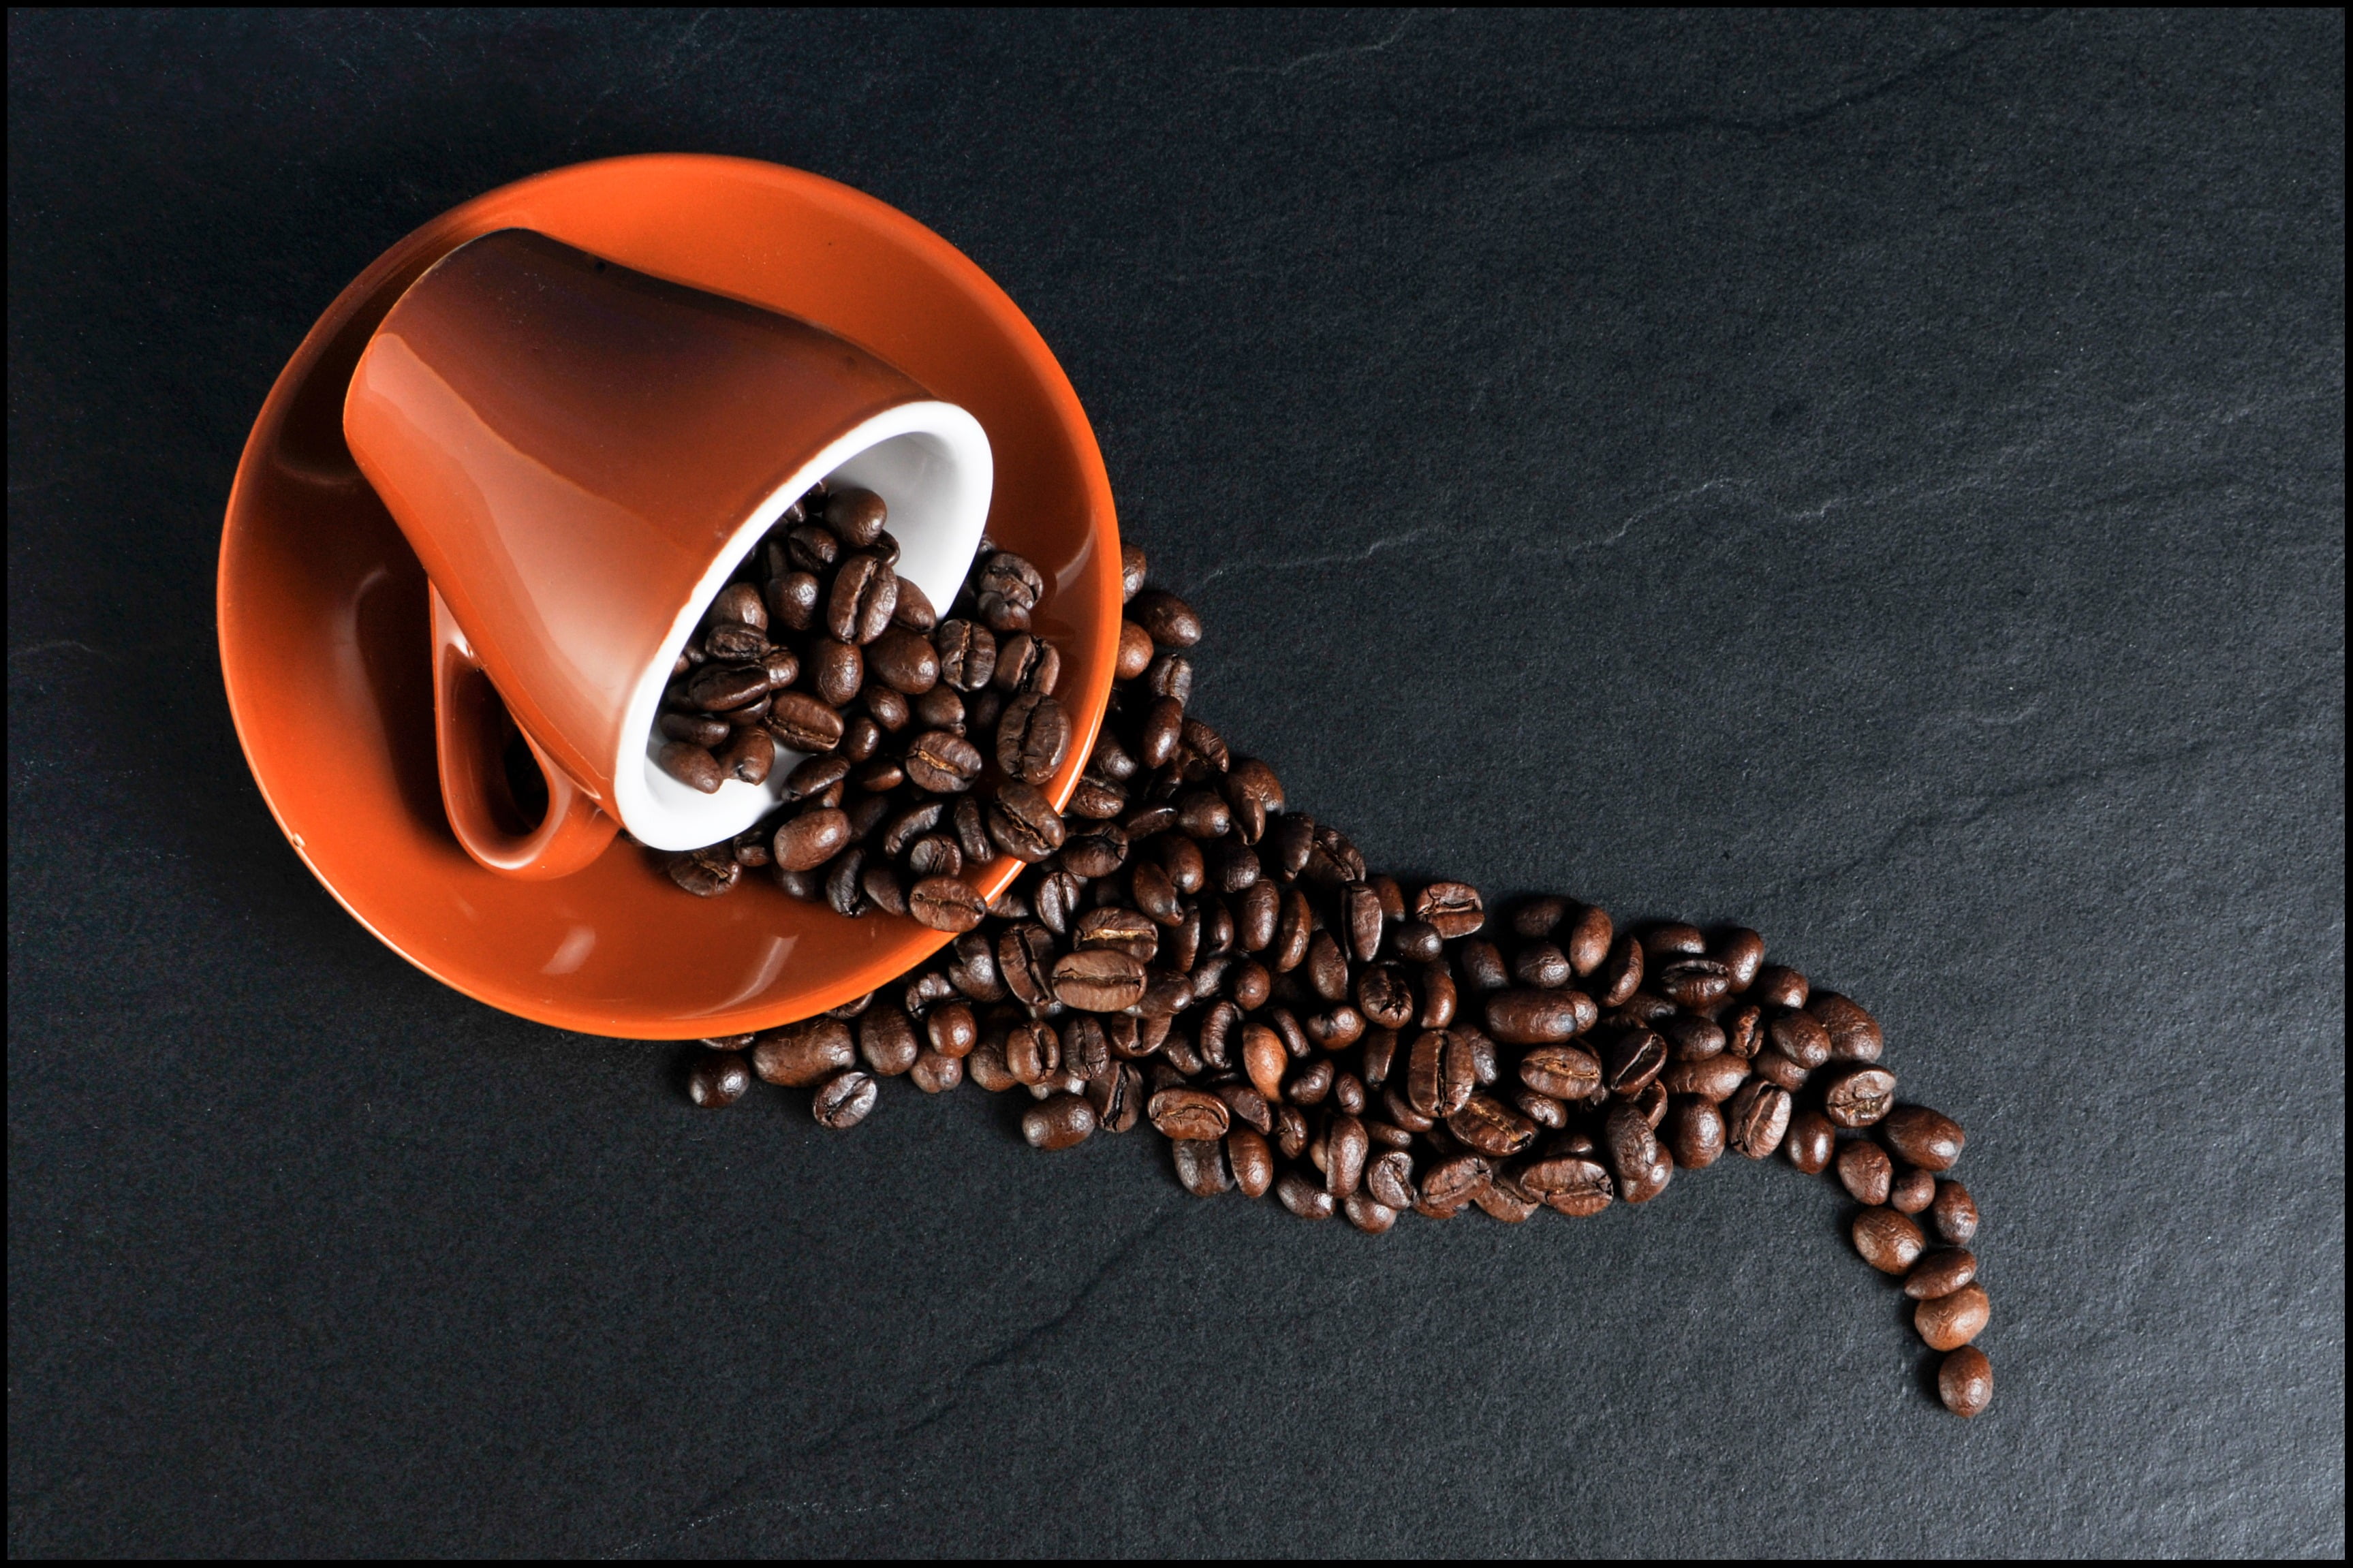 spilled coffee beans on mug